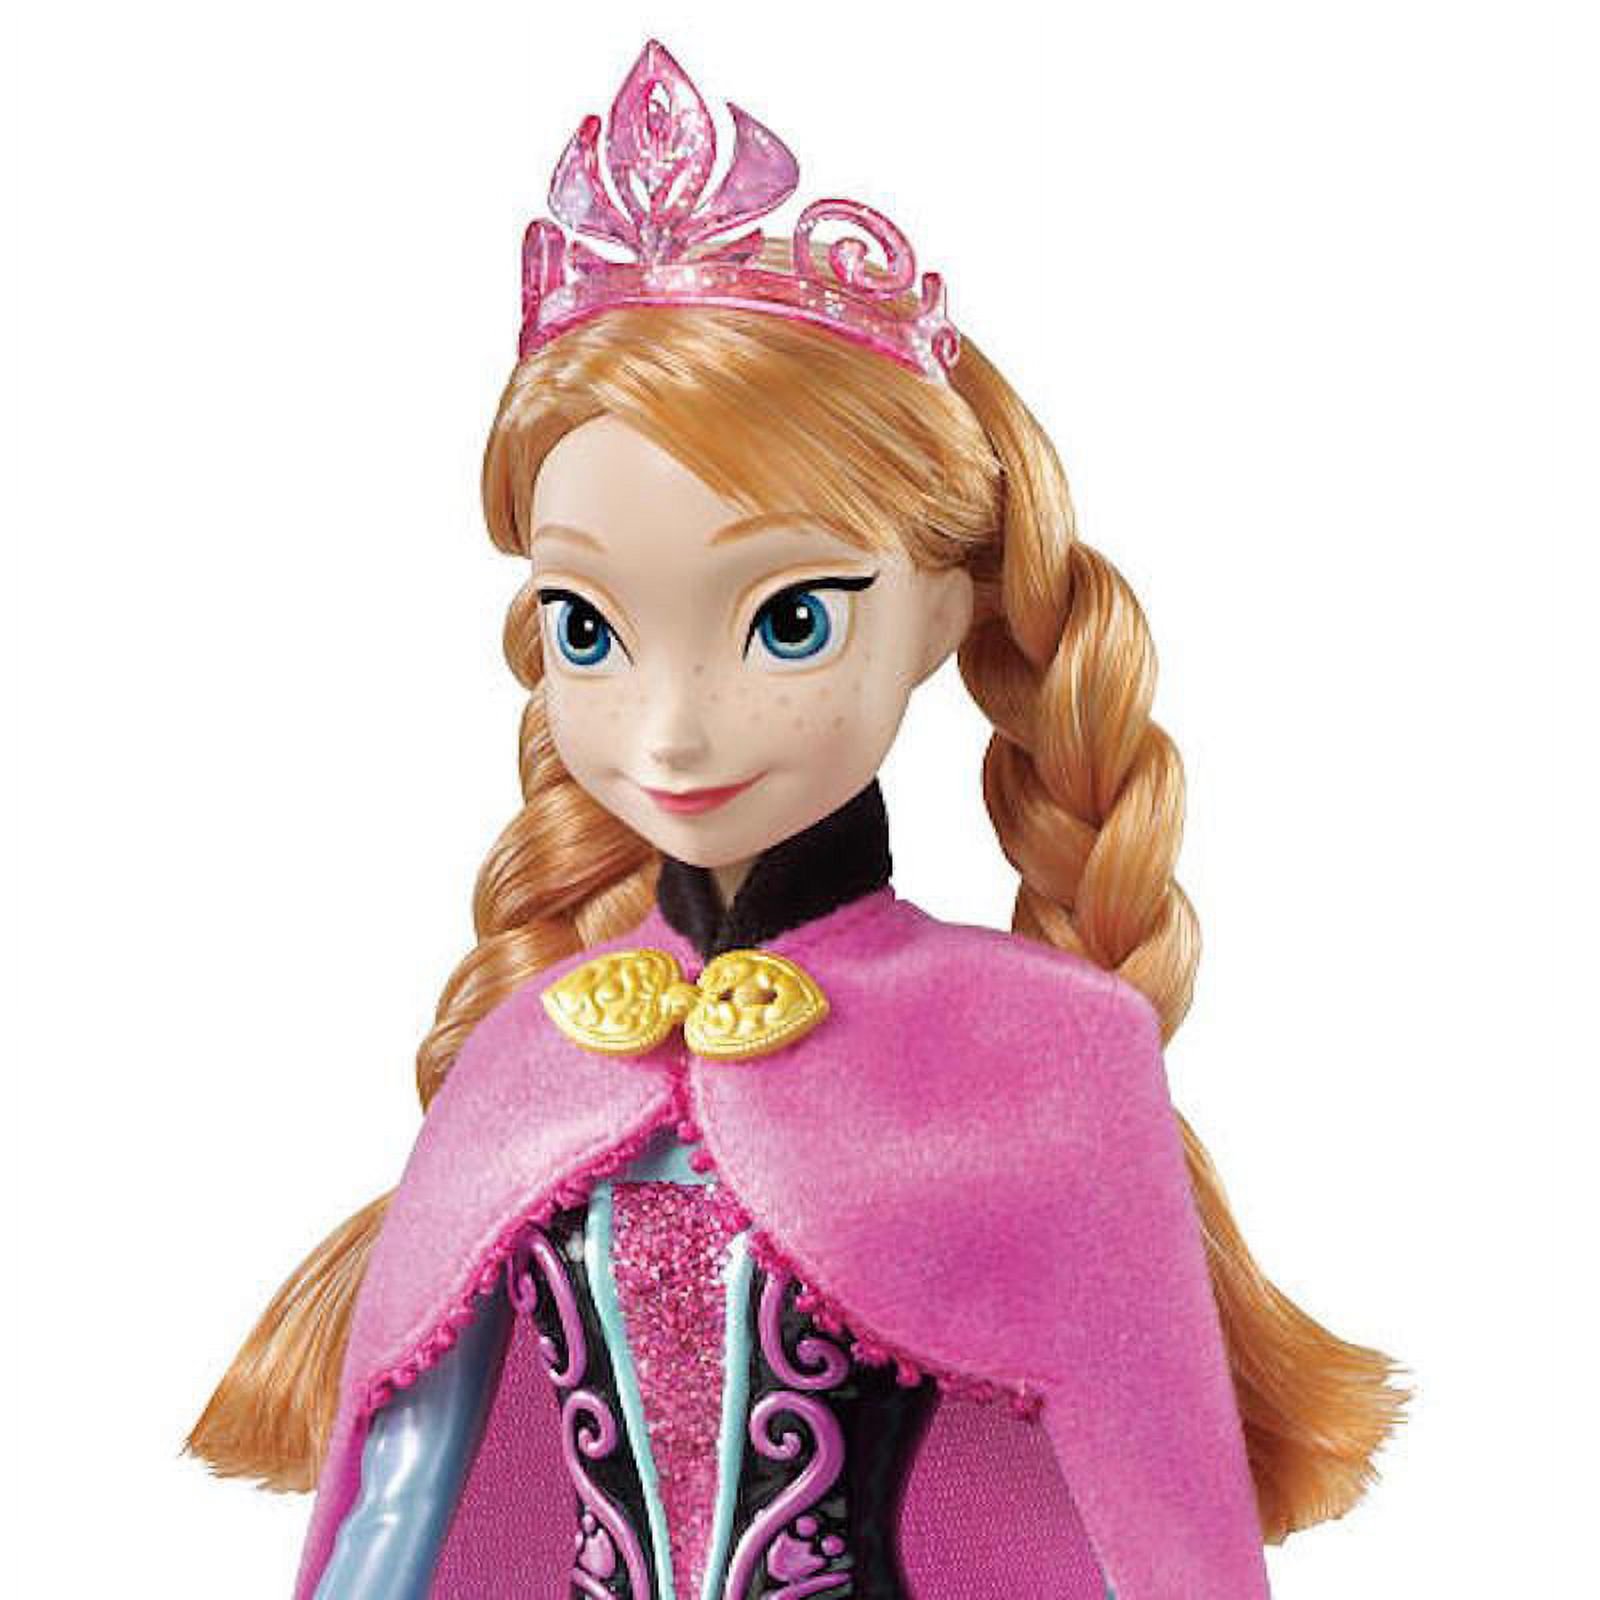 Disney Frozen Sparkle Anna Doll - image 3 of 4